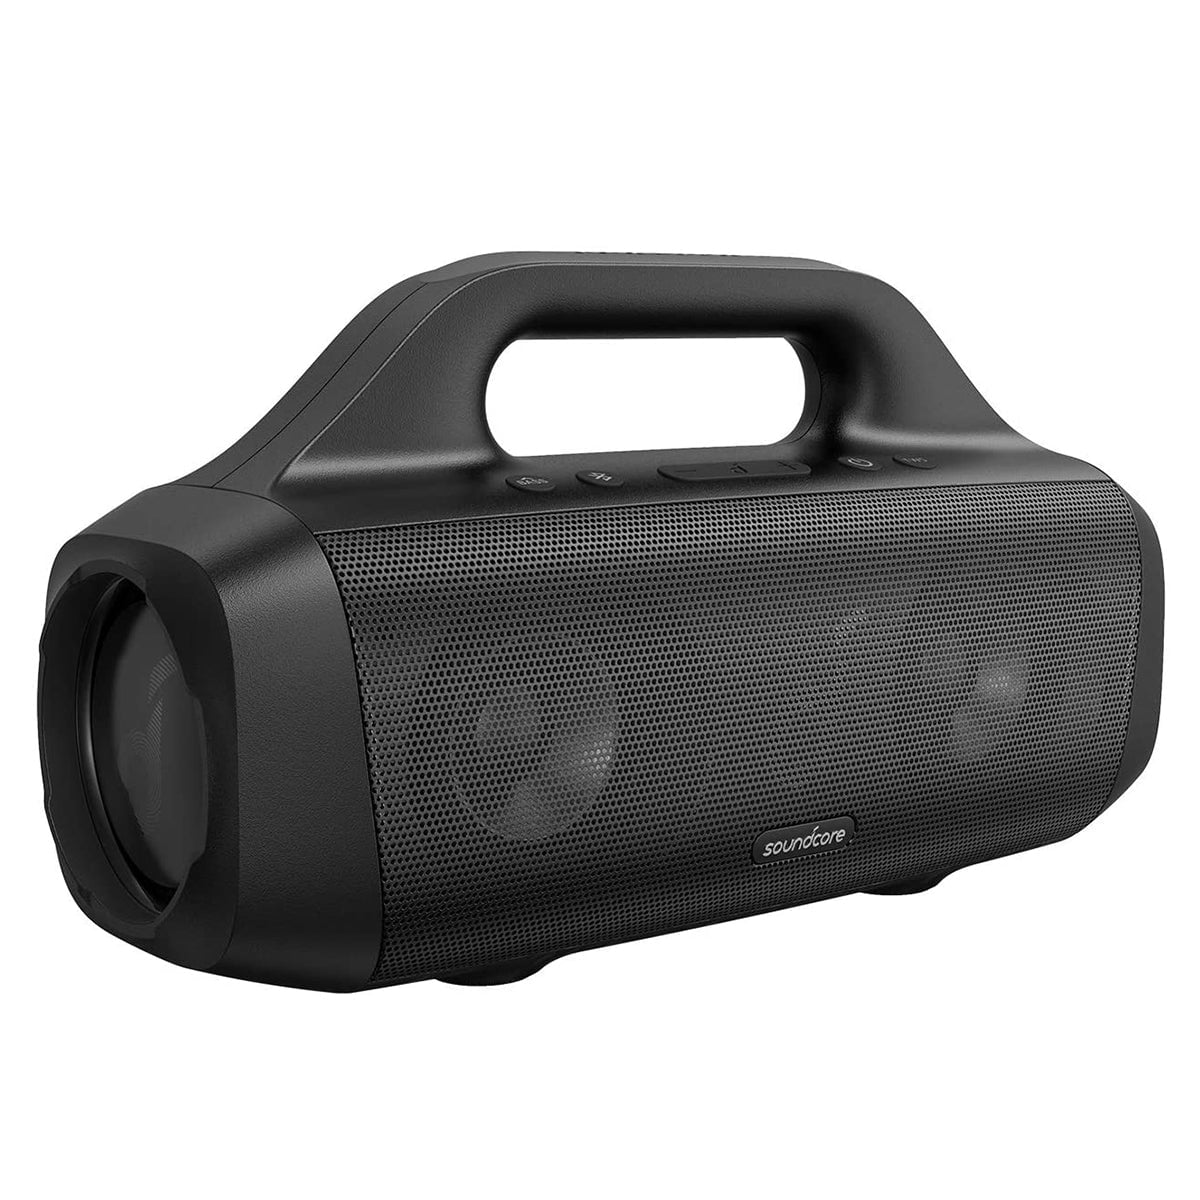 Anker Soundcore Motion Boom Outdoor Speaker Titanium Drivers, BassUpTechnology, App 24H Playtime - Walmart.com